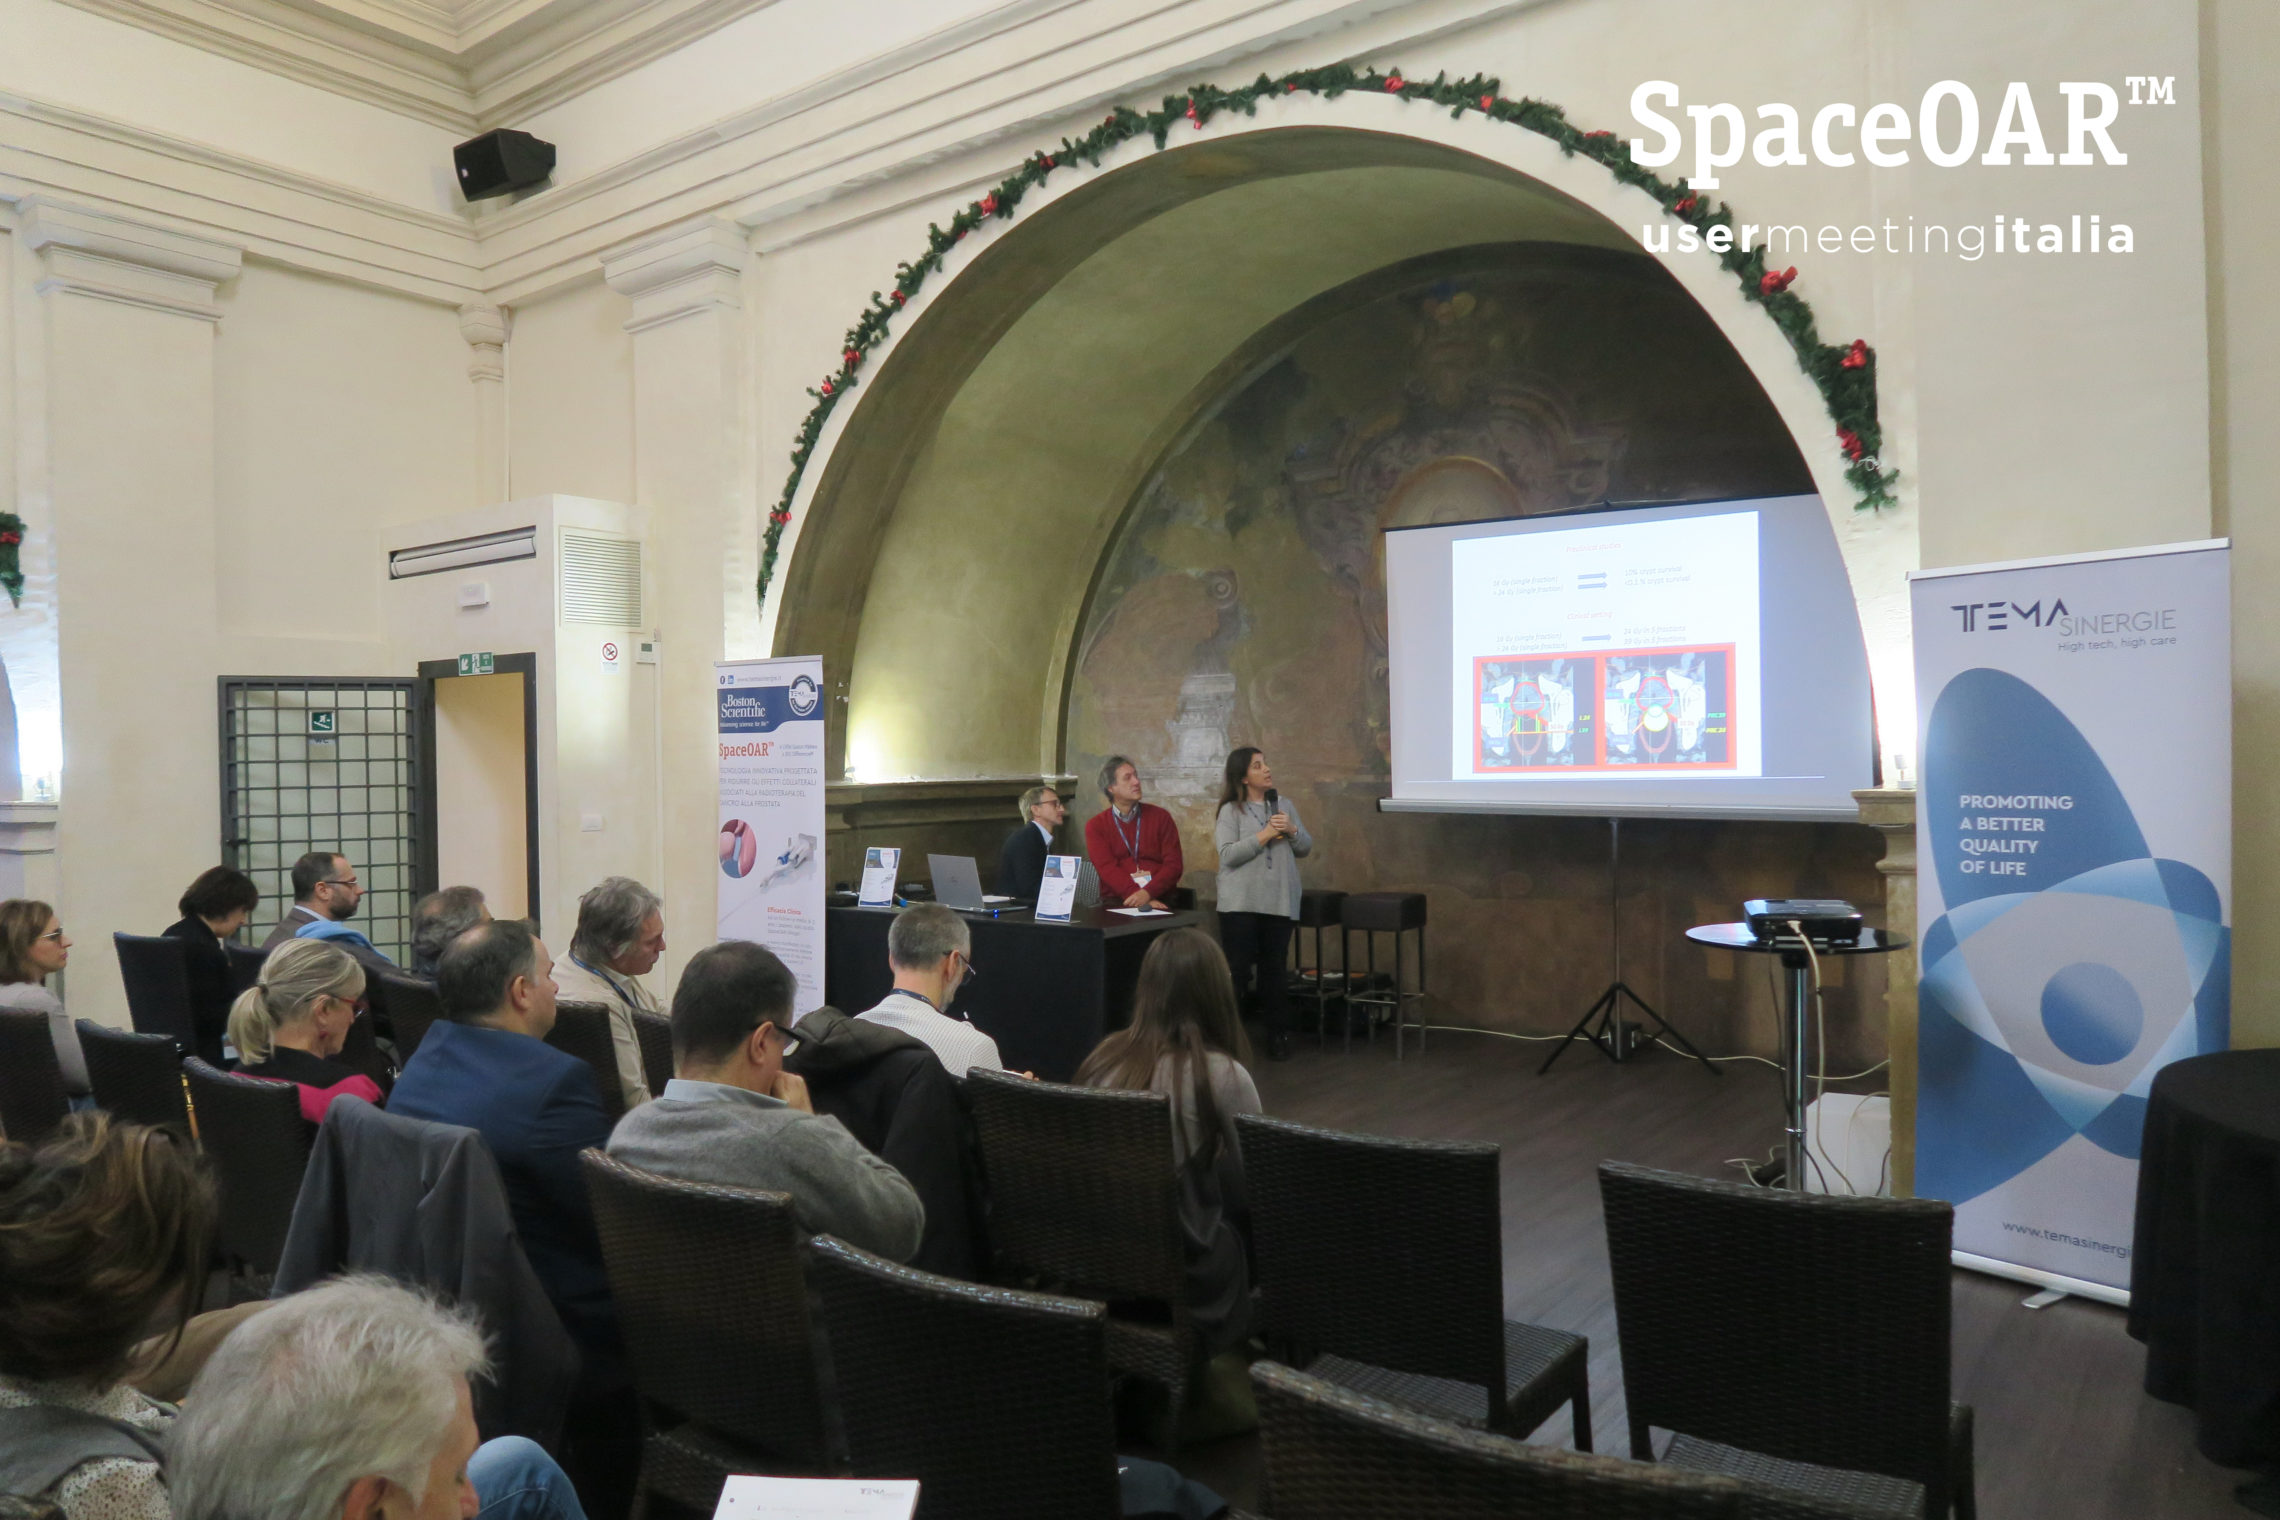 Landoni - Presentation at SpaceOAR User Meeting Italia